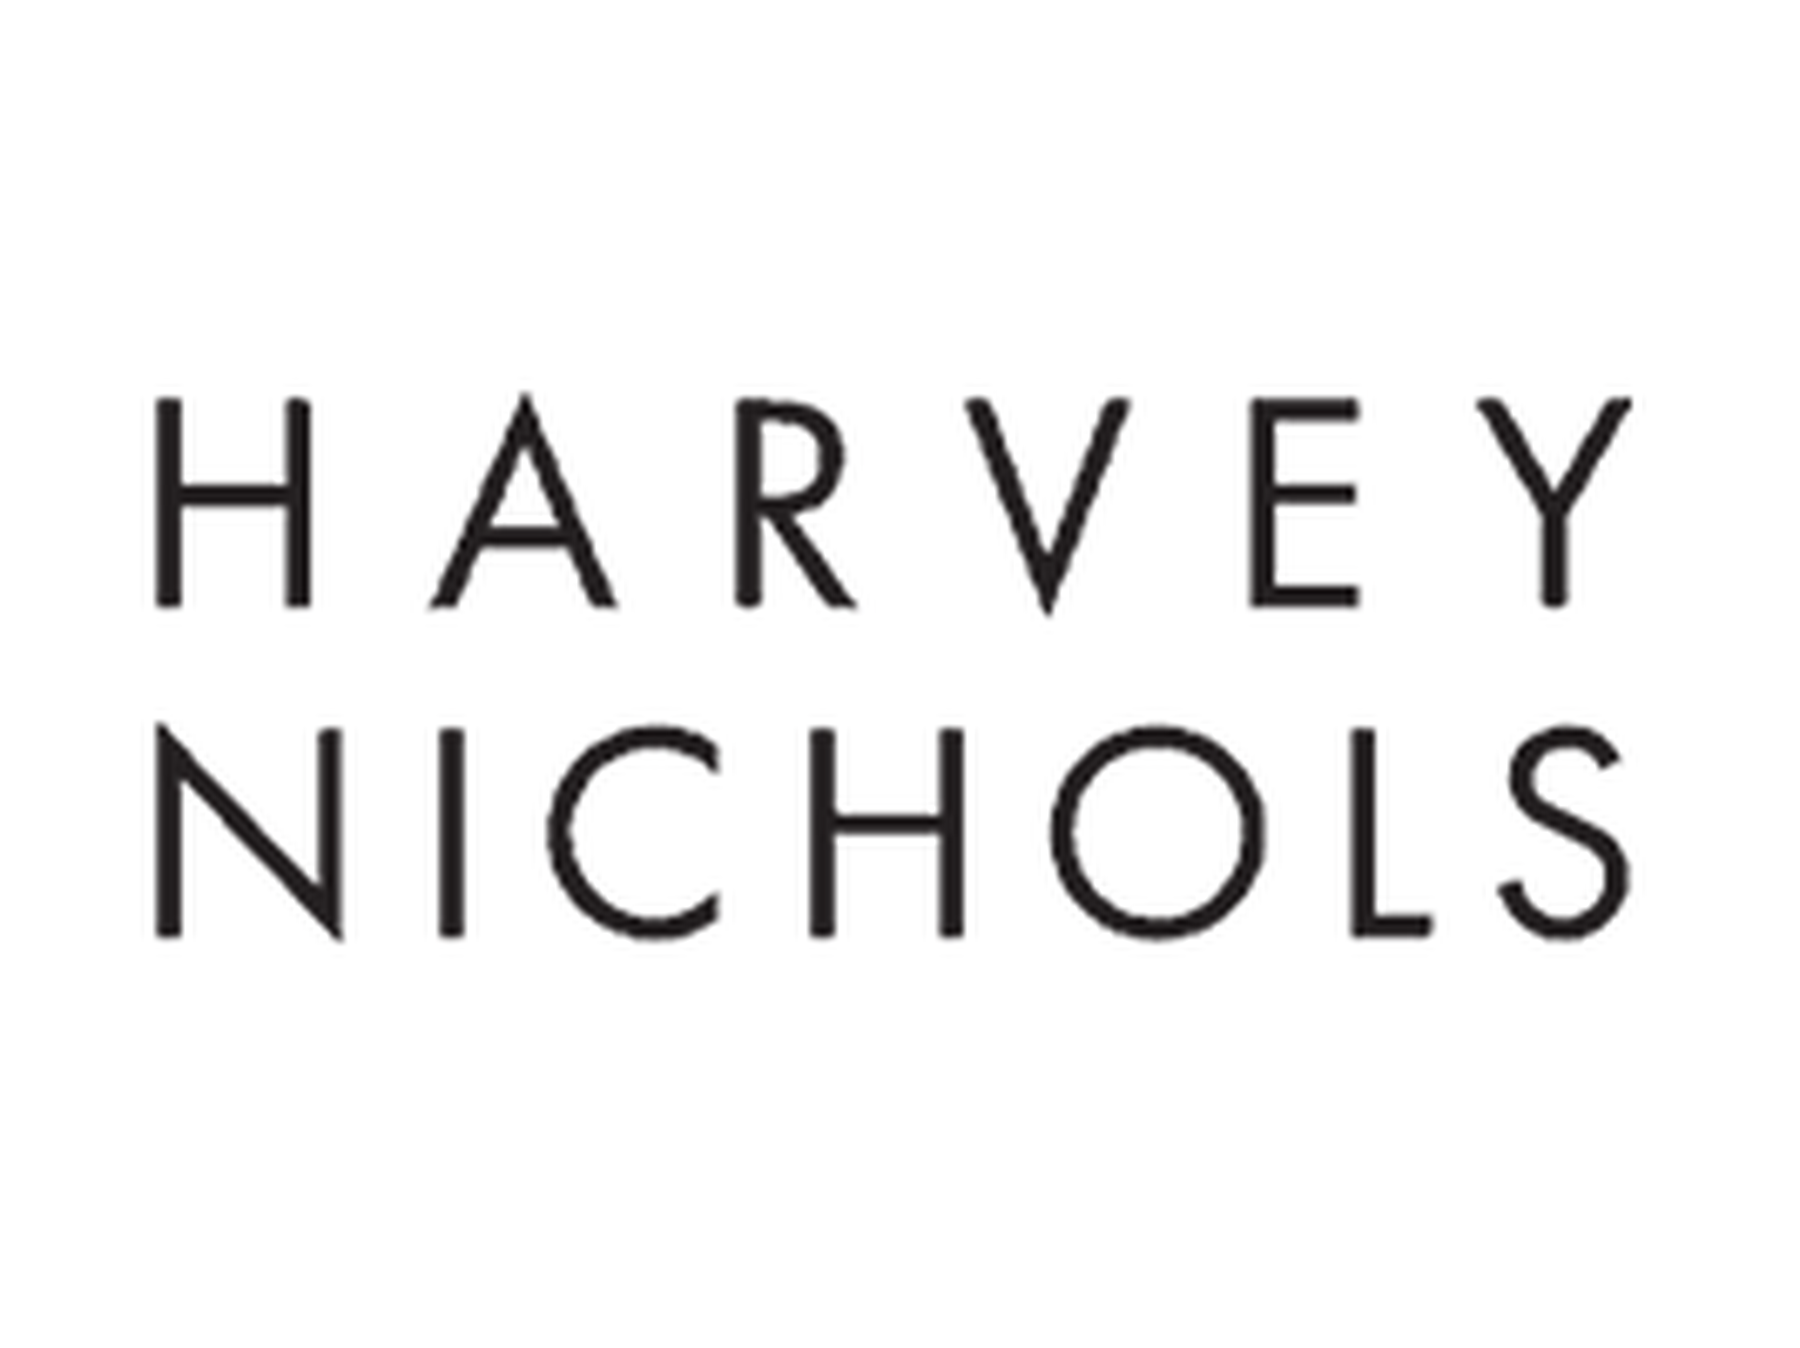 Harvey Nichols Coupons